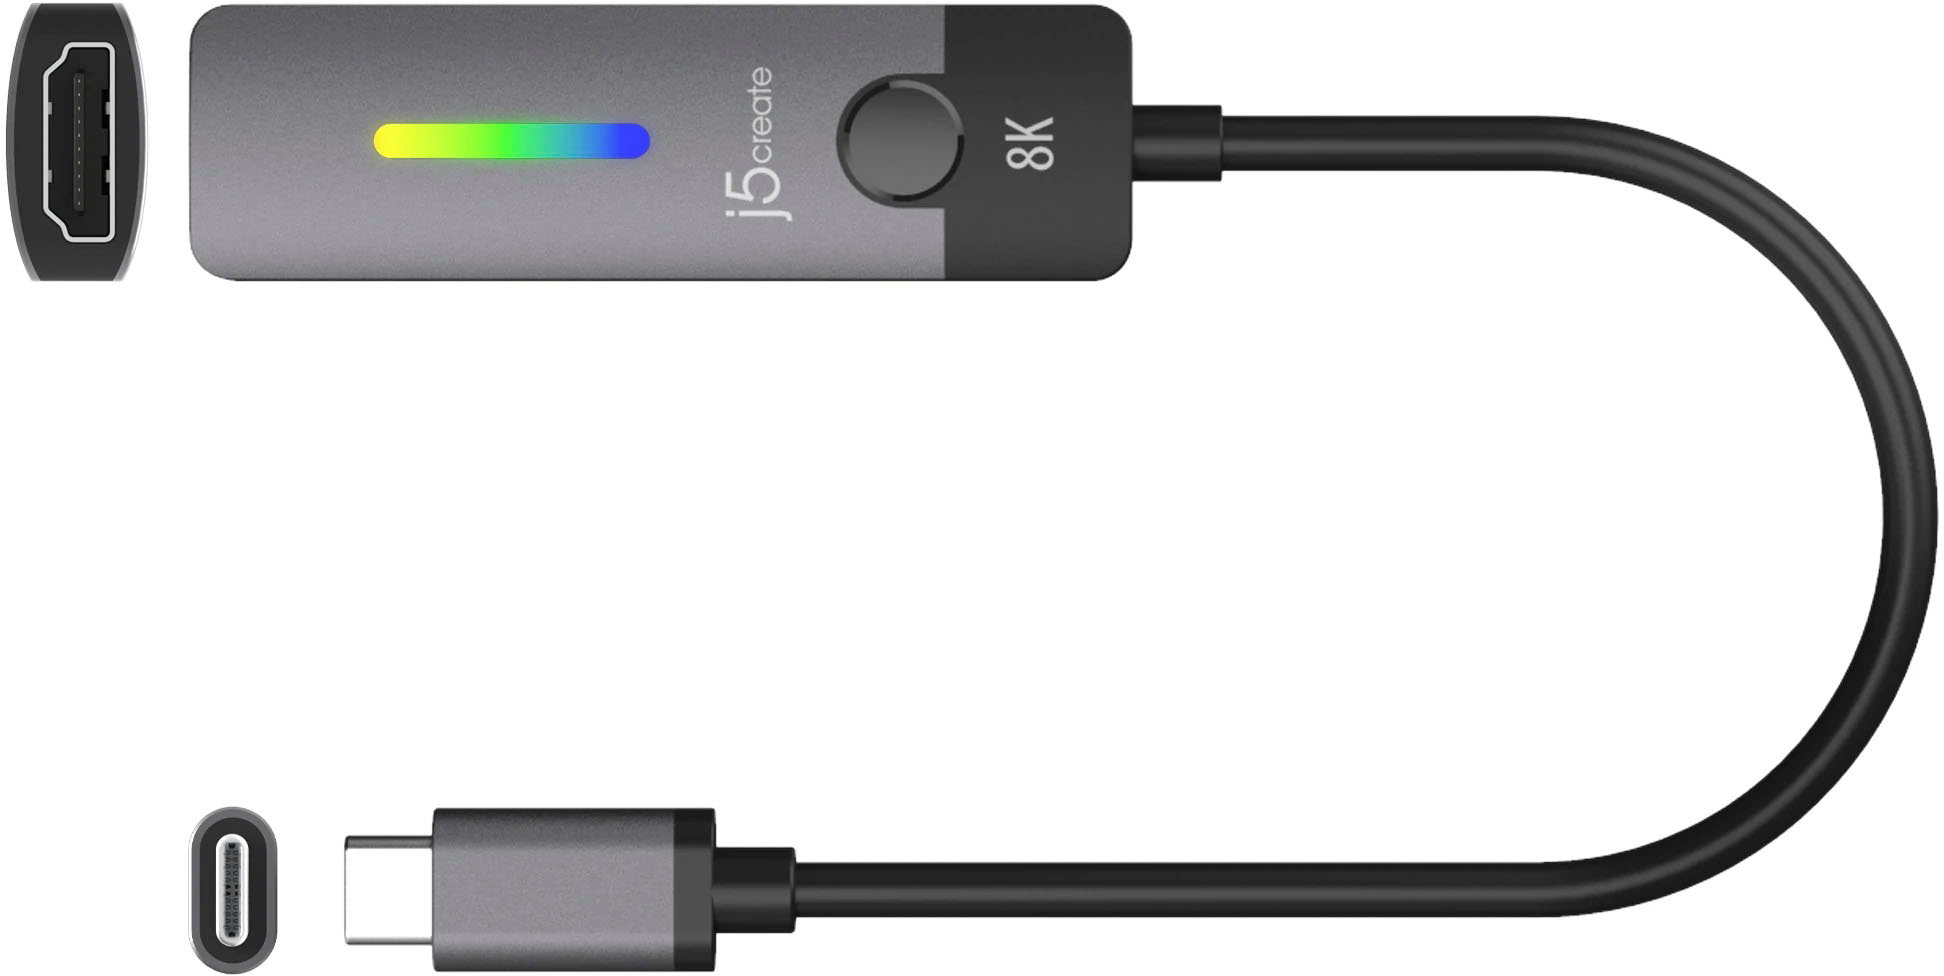 Belkin HDMI-to-Dual-VGA Adapter Black F2CD063TT - Best Buy